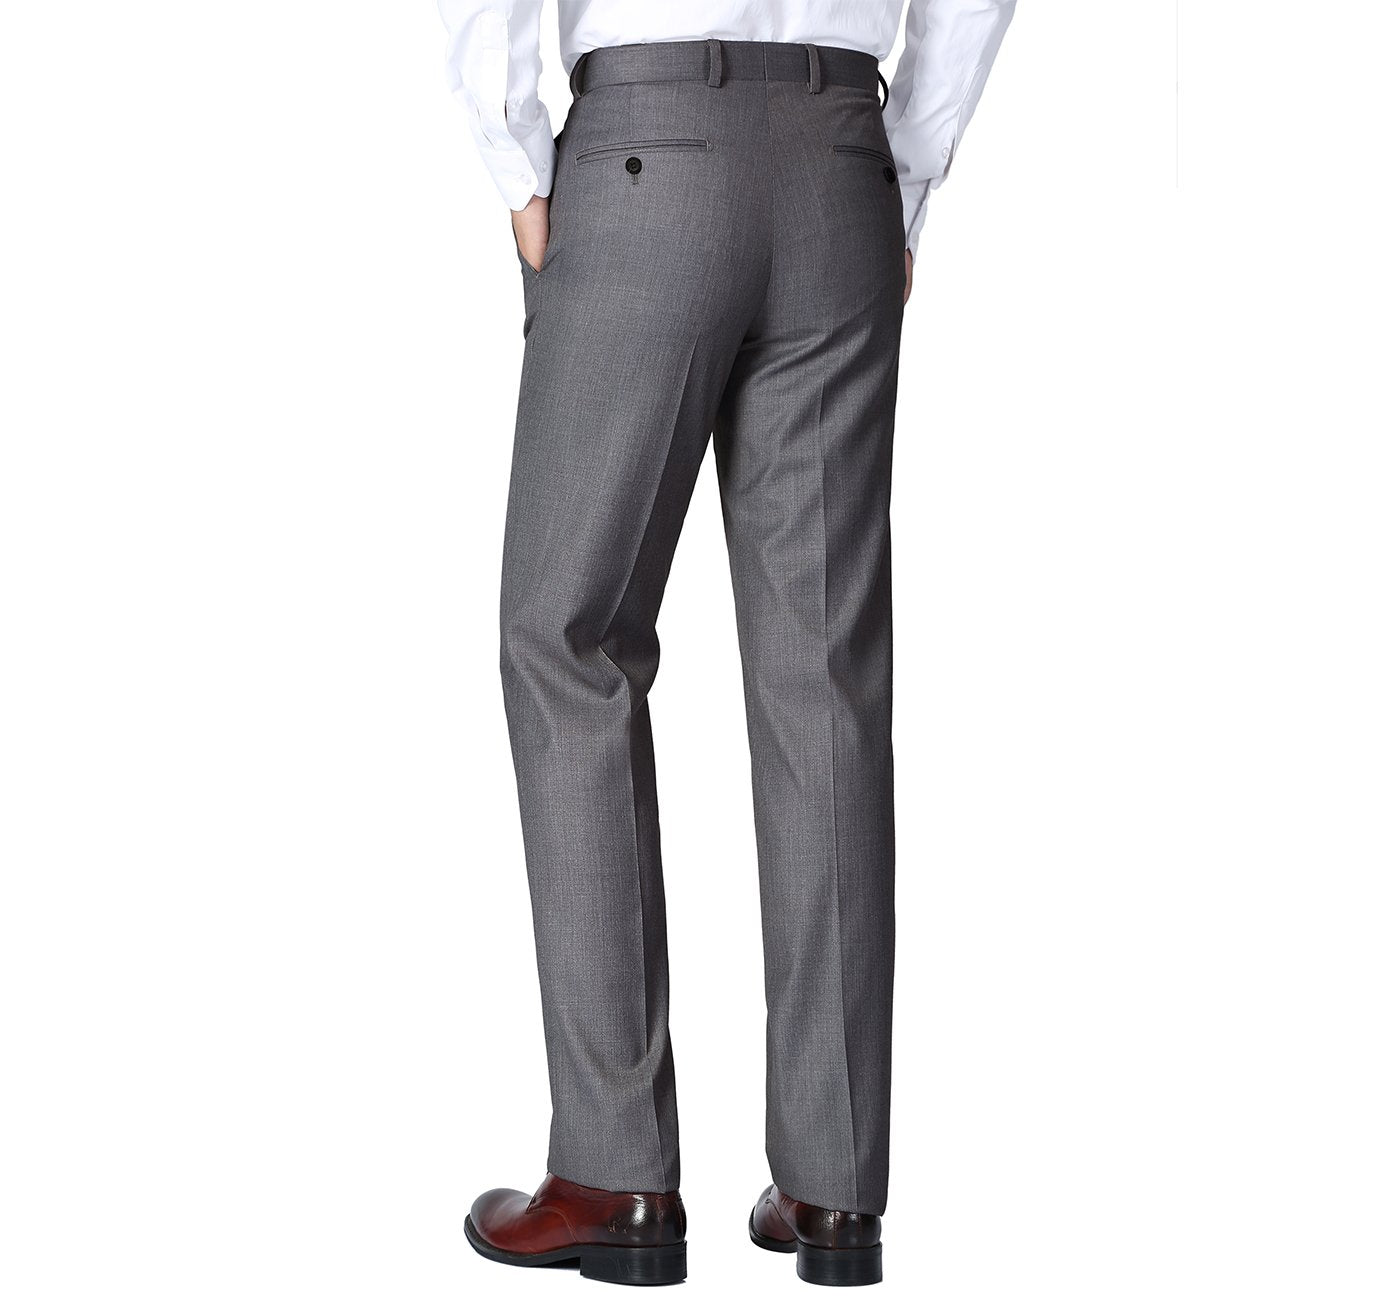 508-3 Men's Charcoal Grey Classic Fit Flat Front Wool Suit Pant